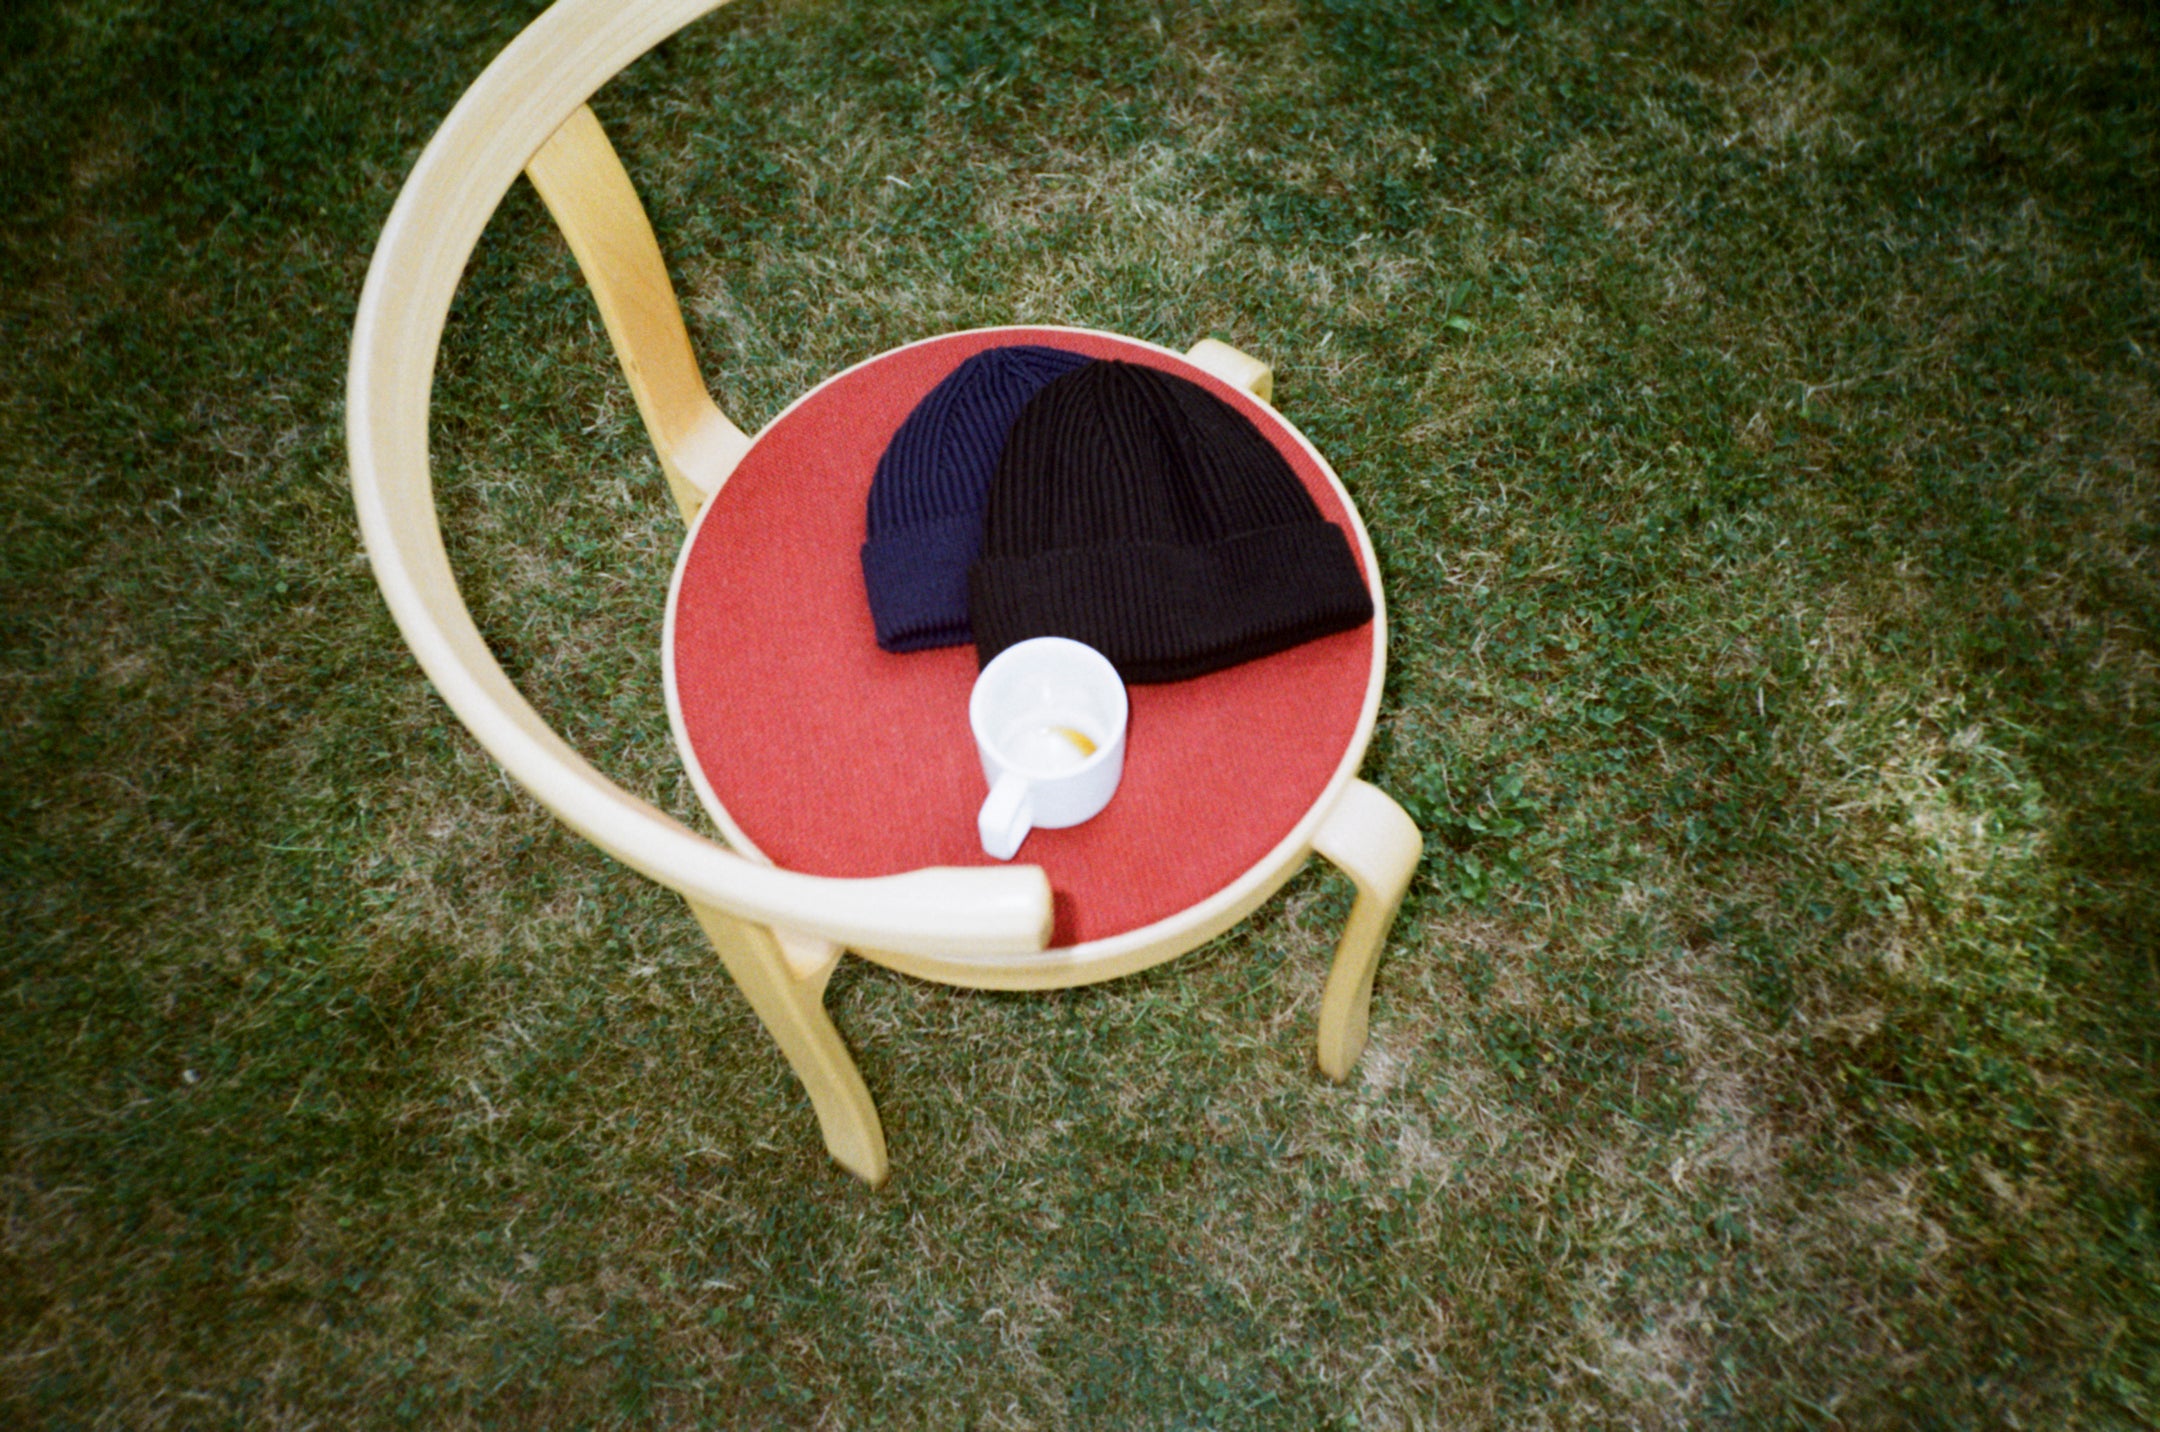 TUNØ Knitted Beanie Hat in Black